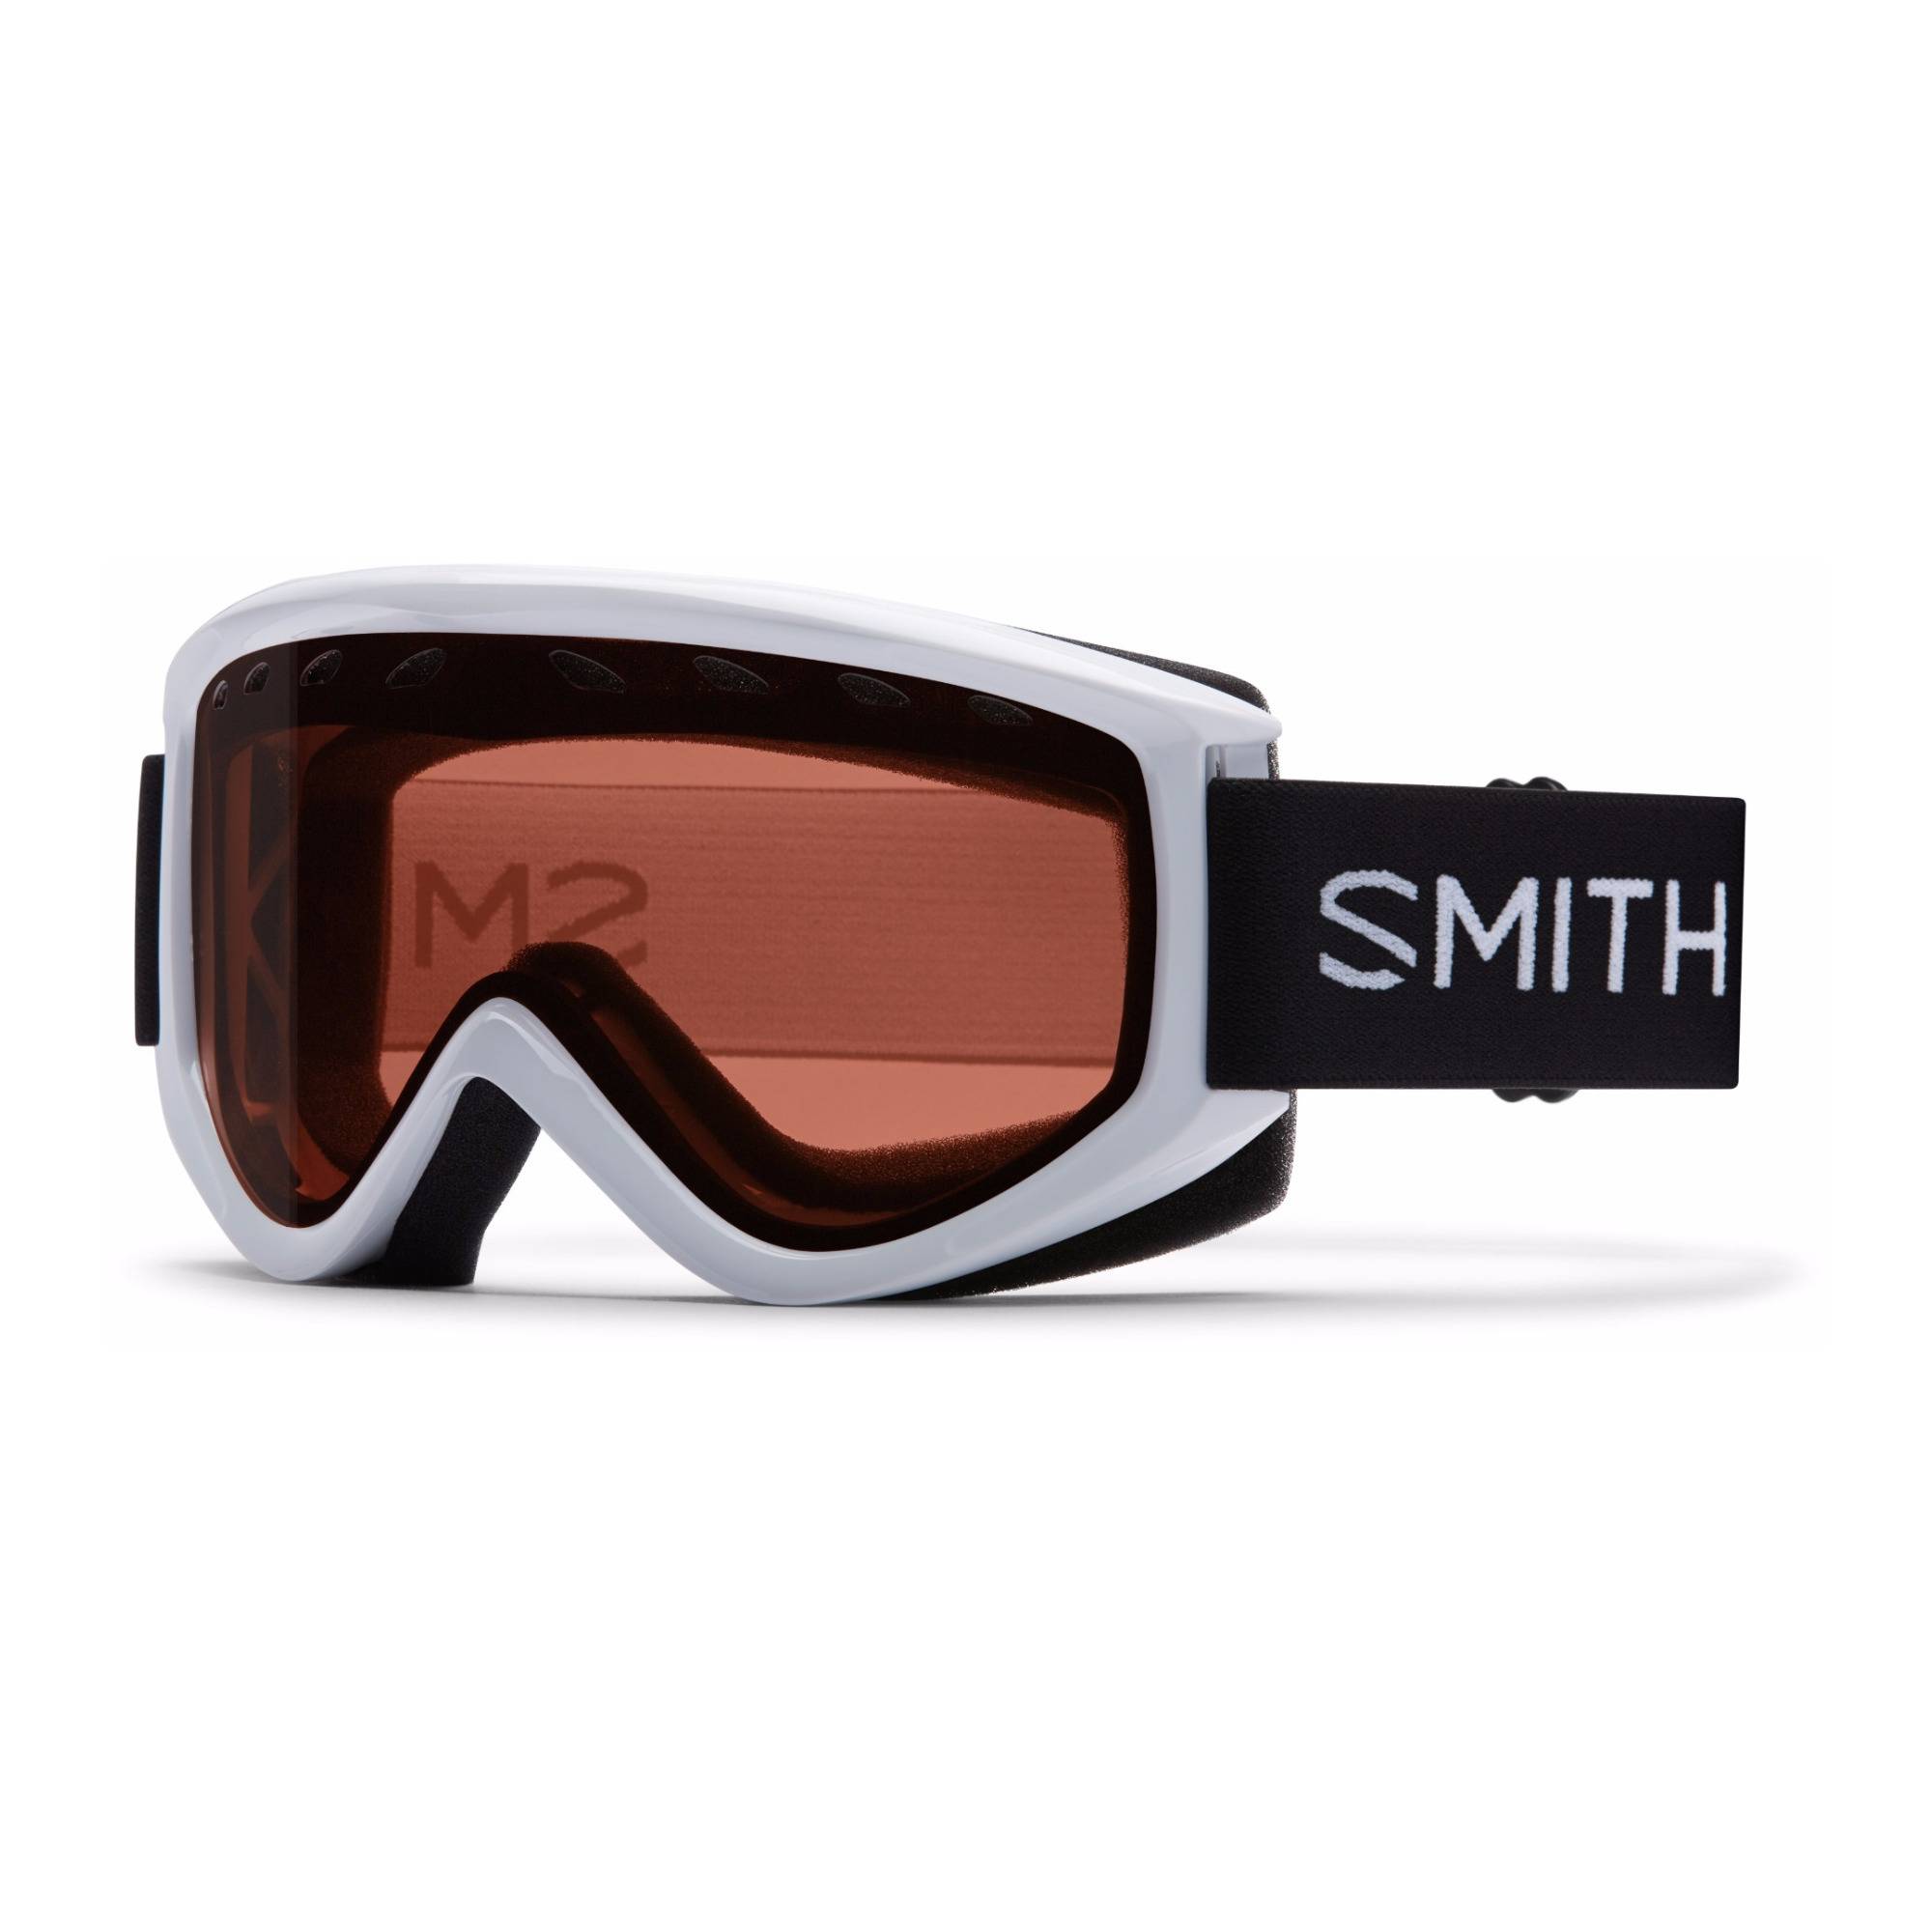 Smith Optics Medium Fit Electra Unisex Snow Goggle (White, RC36 Lens)